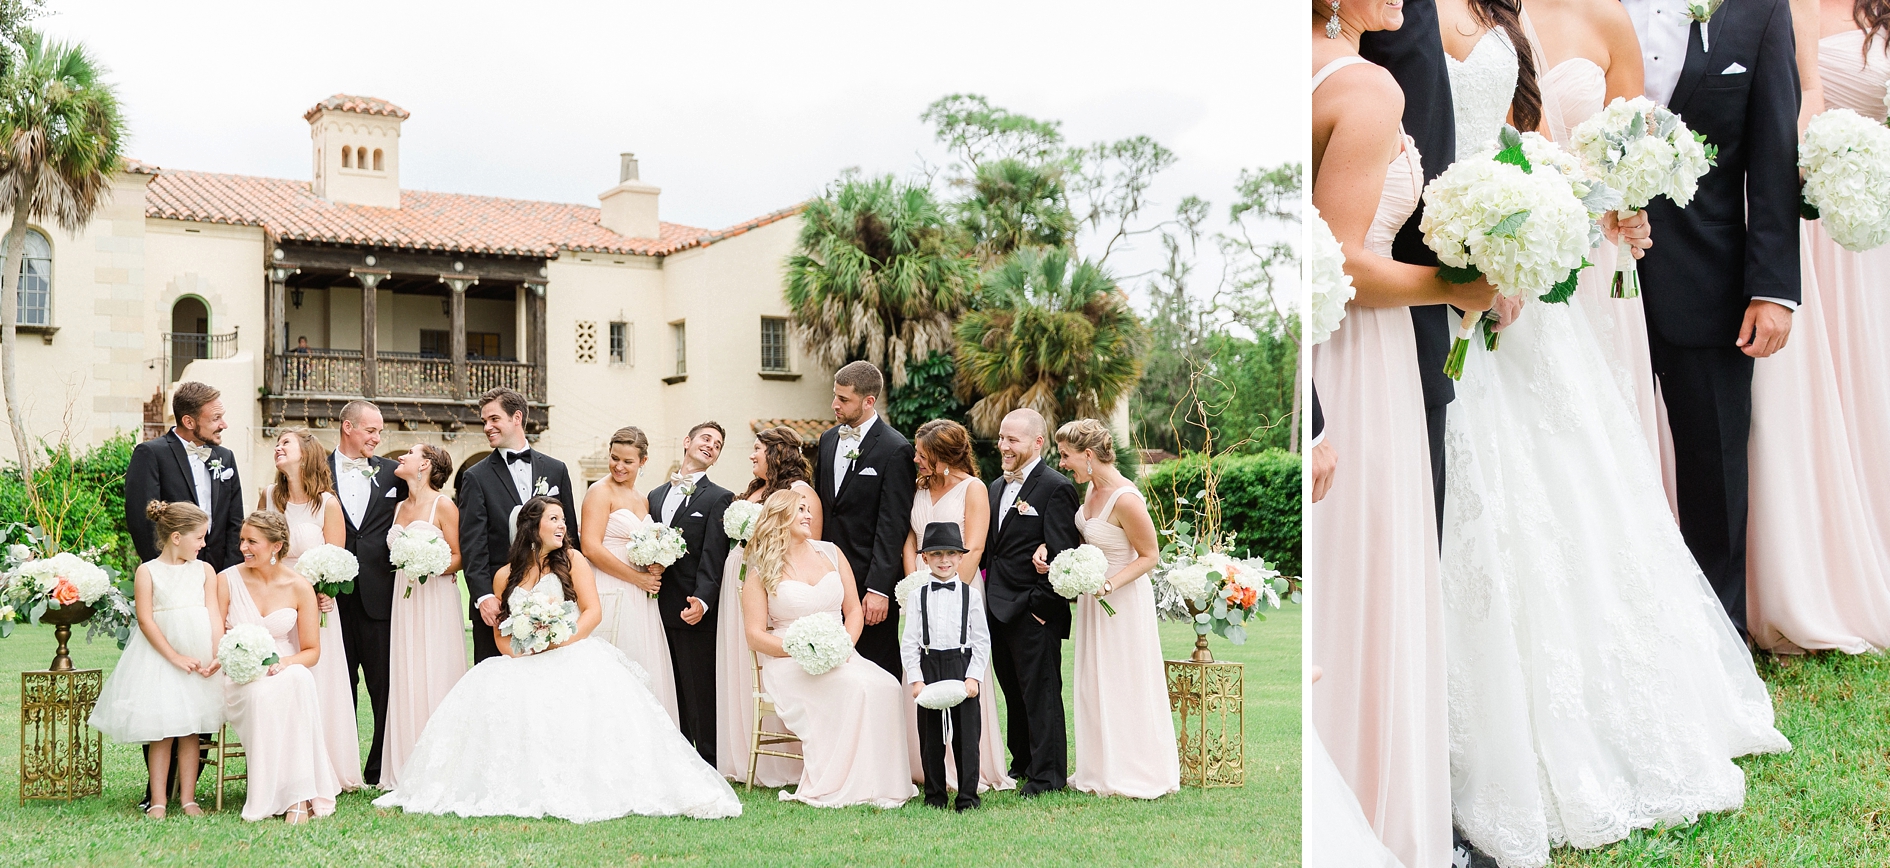 Powel Crosley Estate Wedding | © Ailyn La Torre Photography 2015